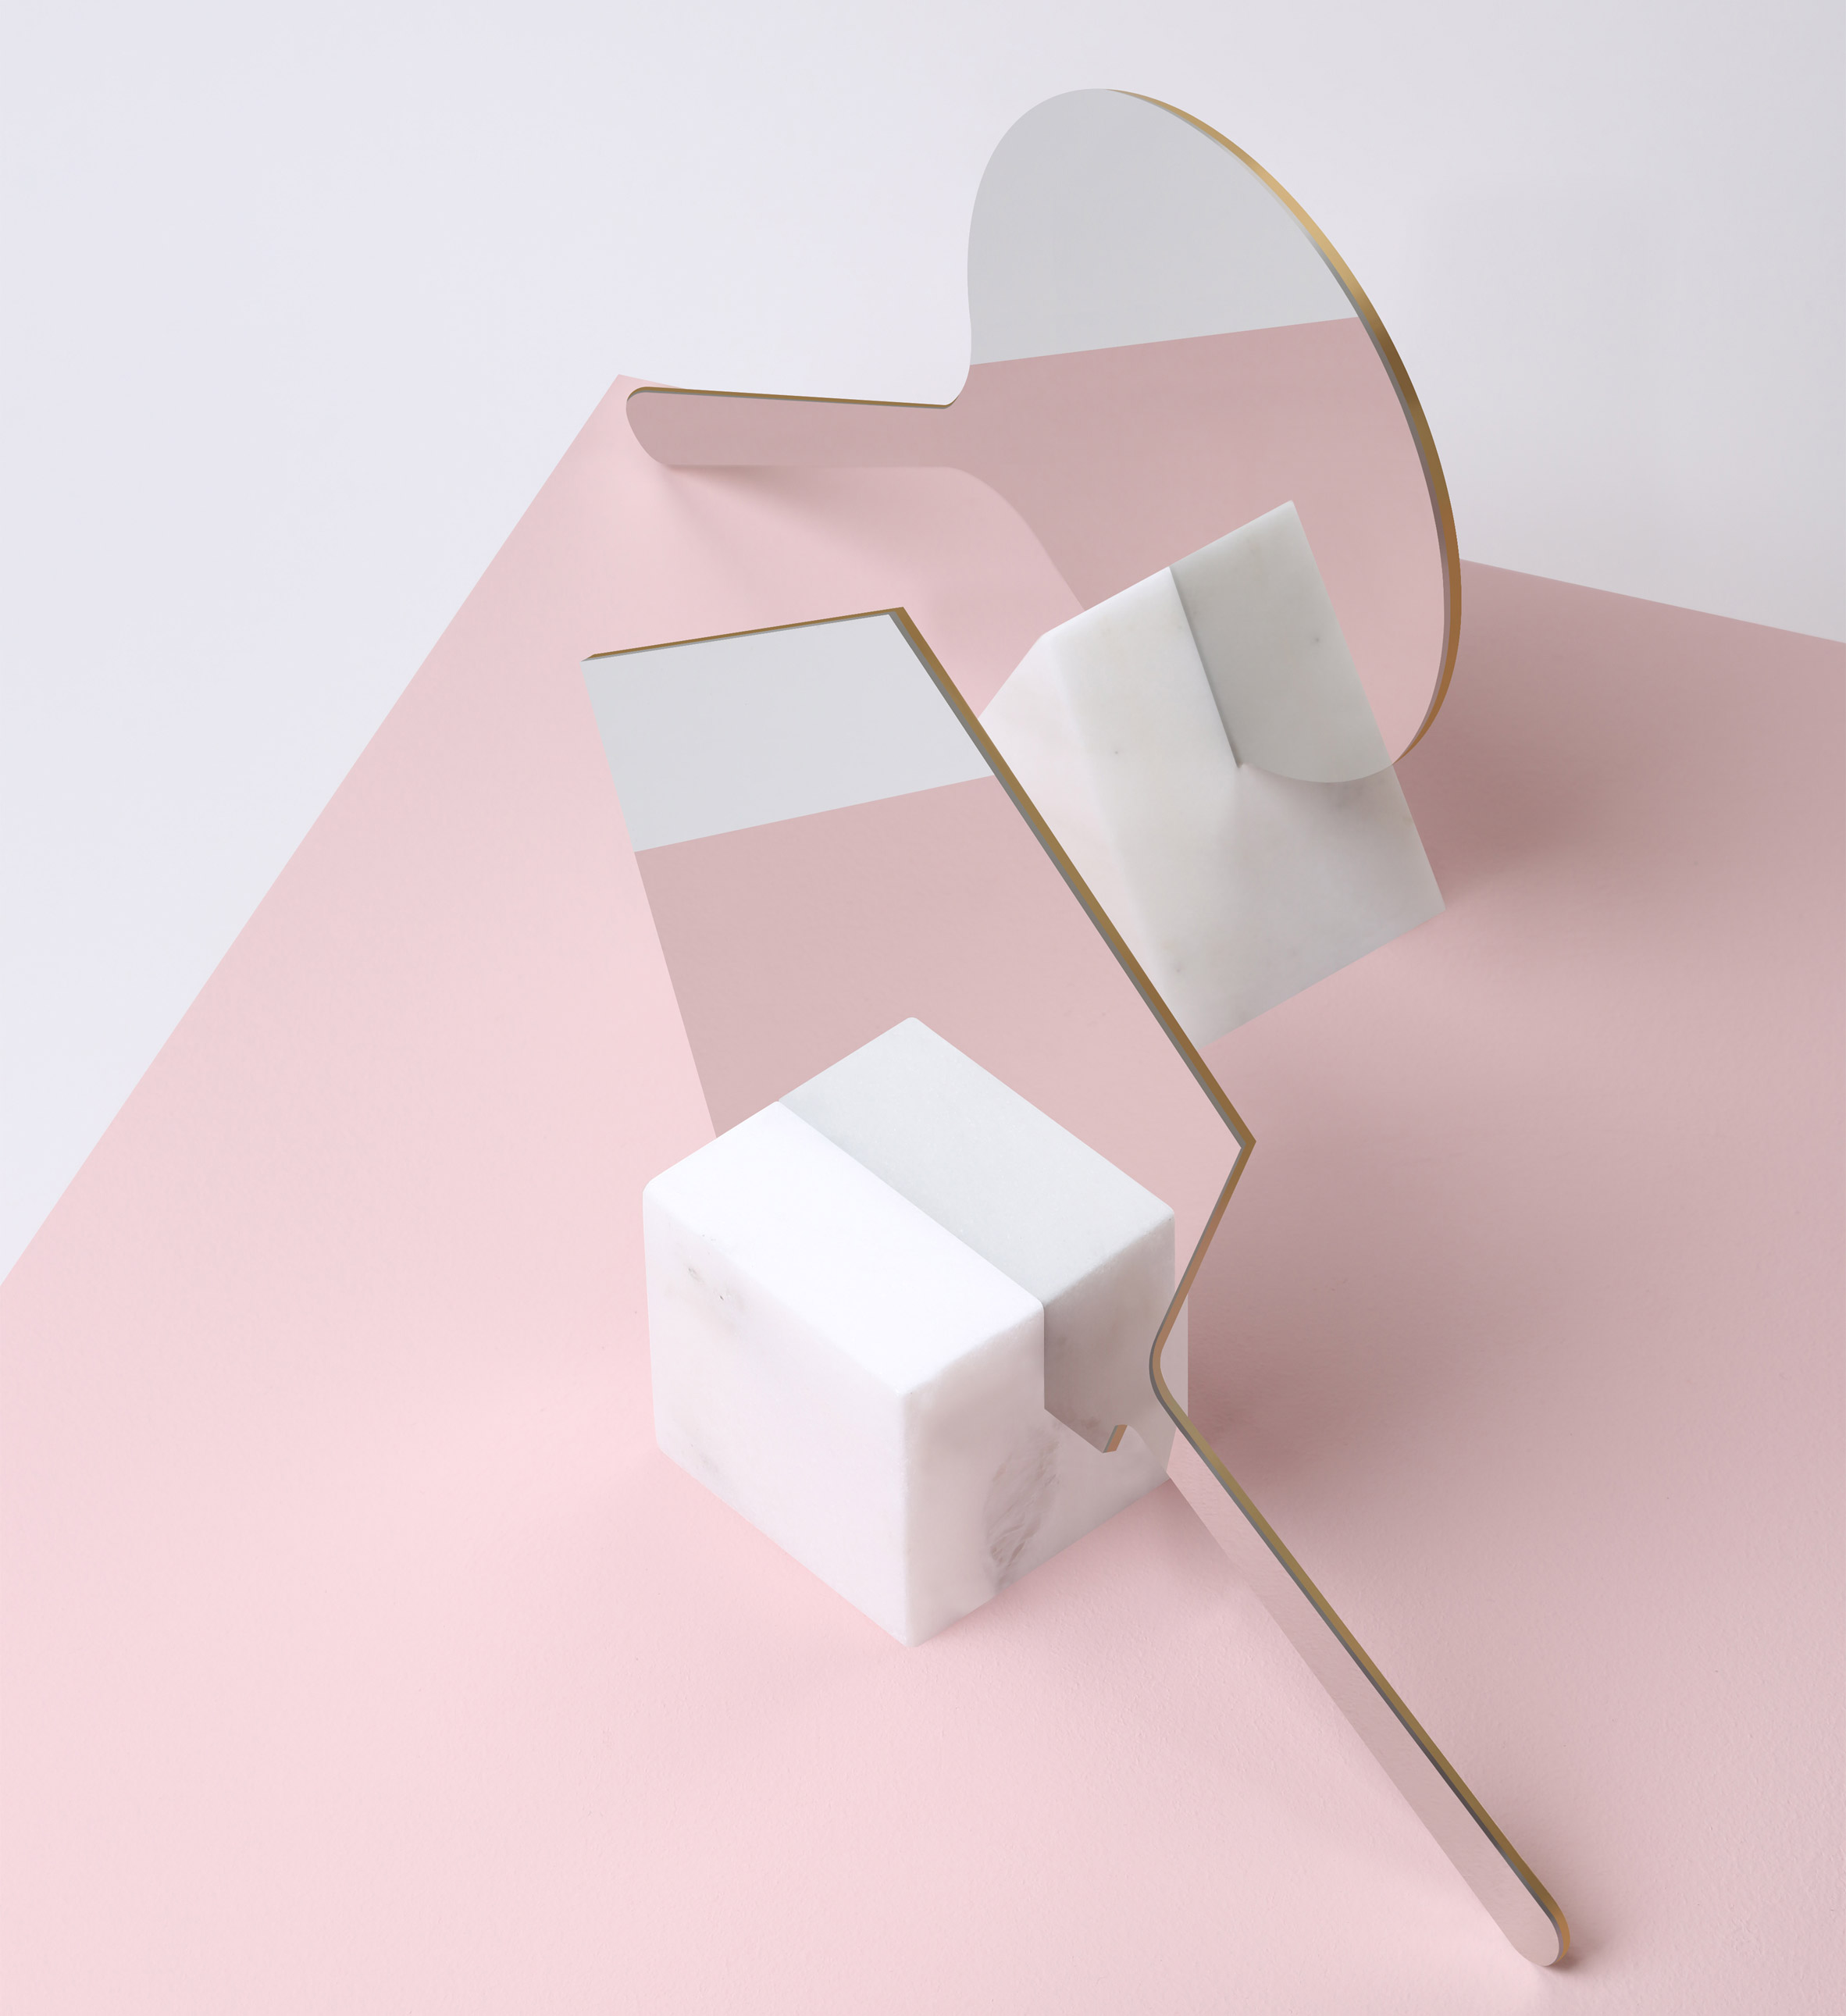 Richard Yasmine's Ashkal mirrors slice into geometric bases